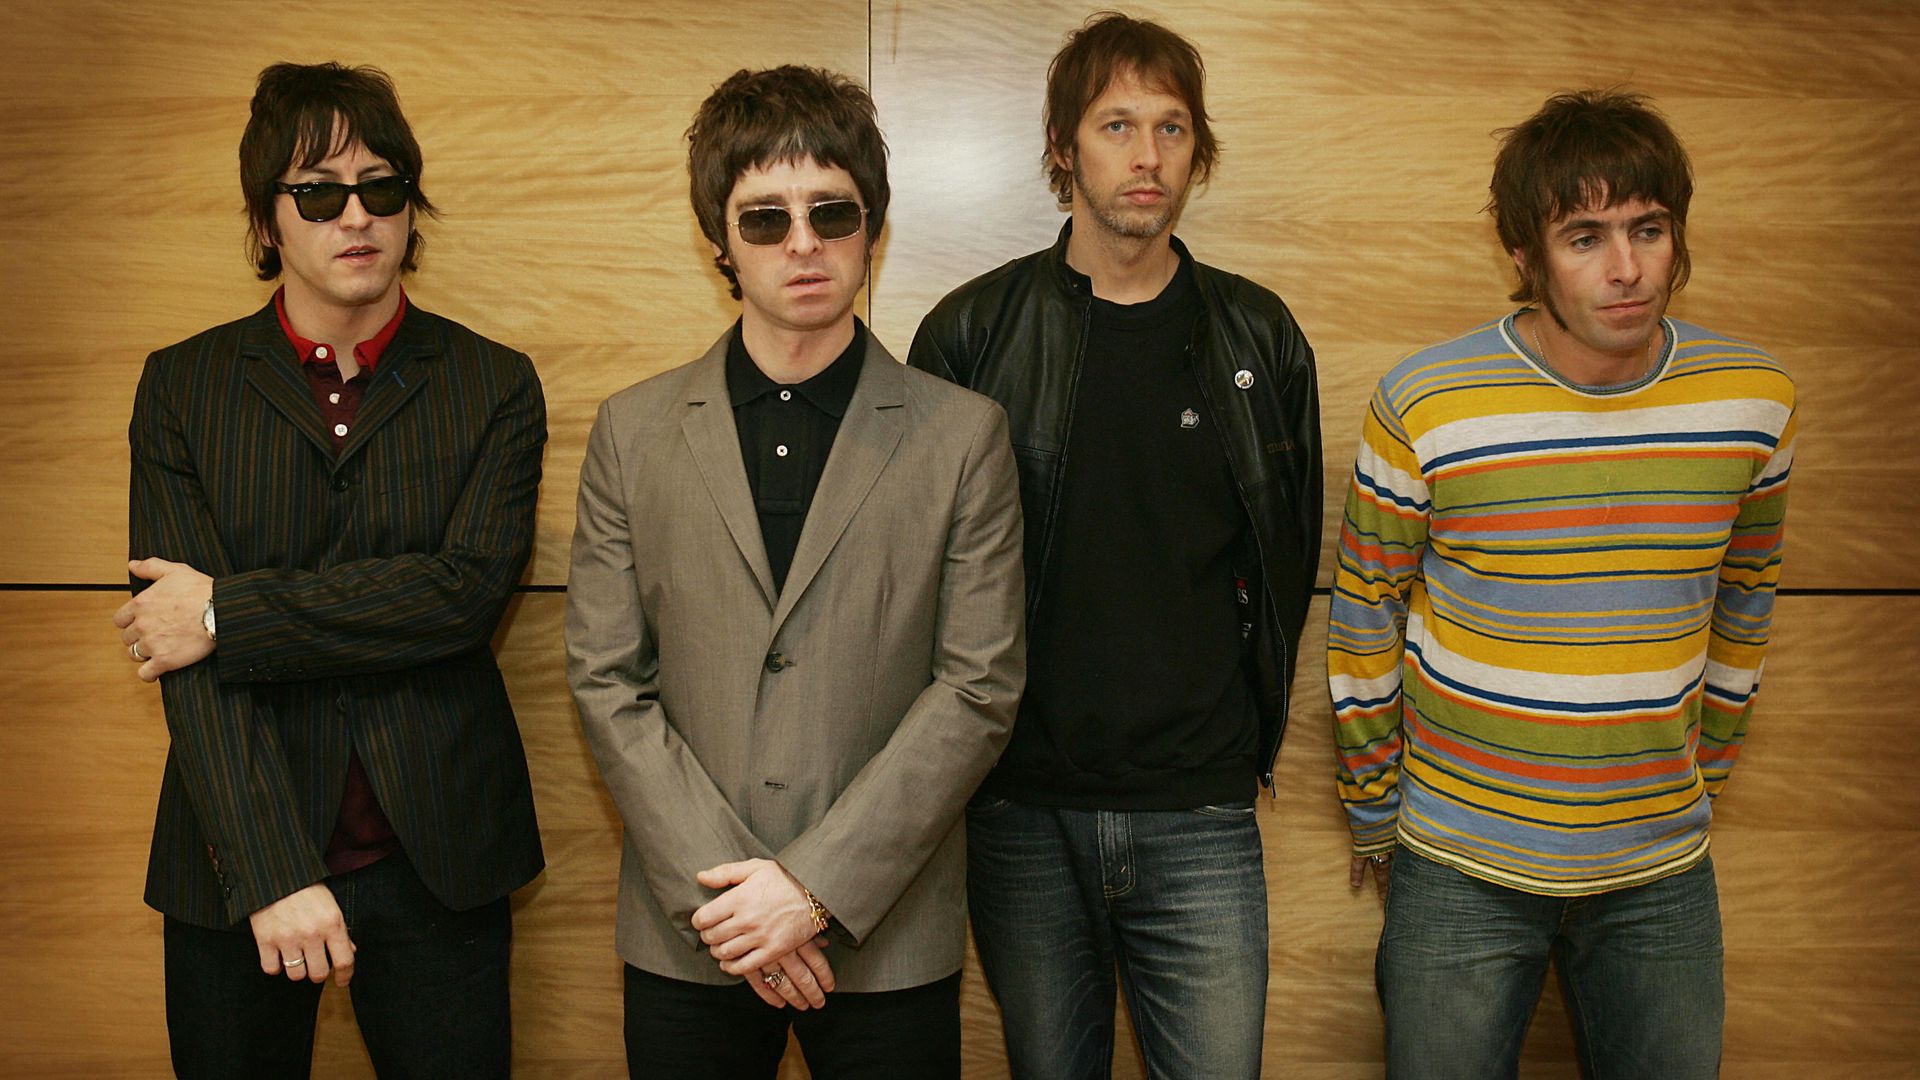 Oasis - Biography